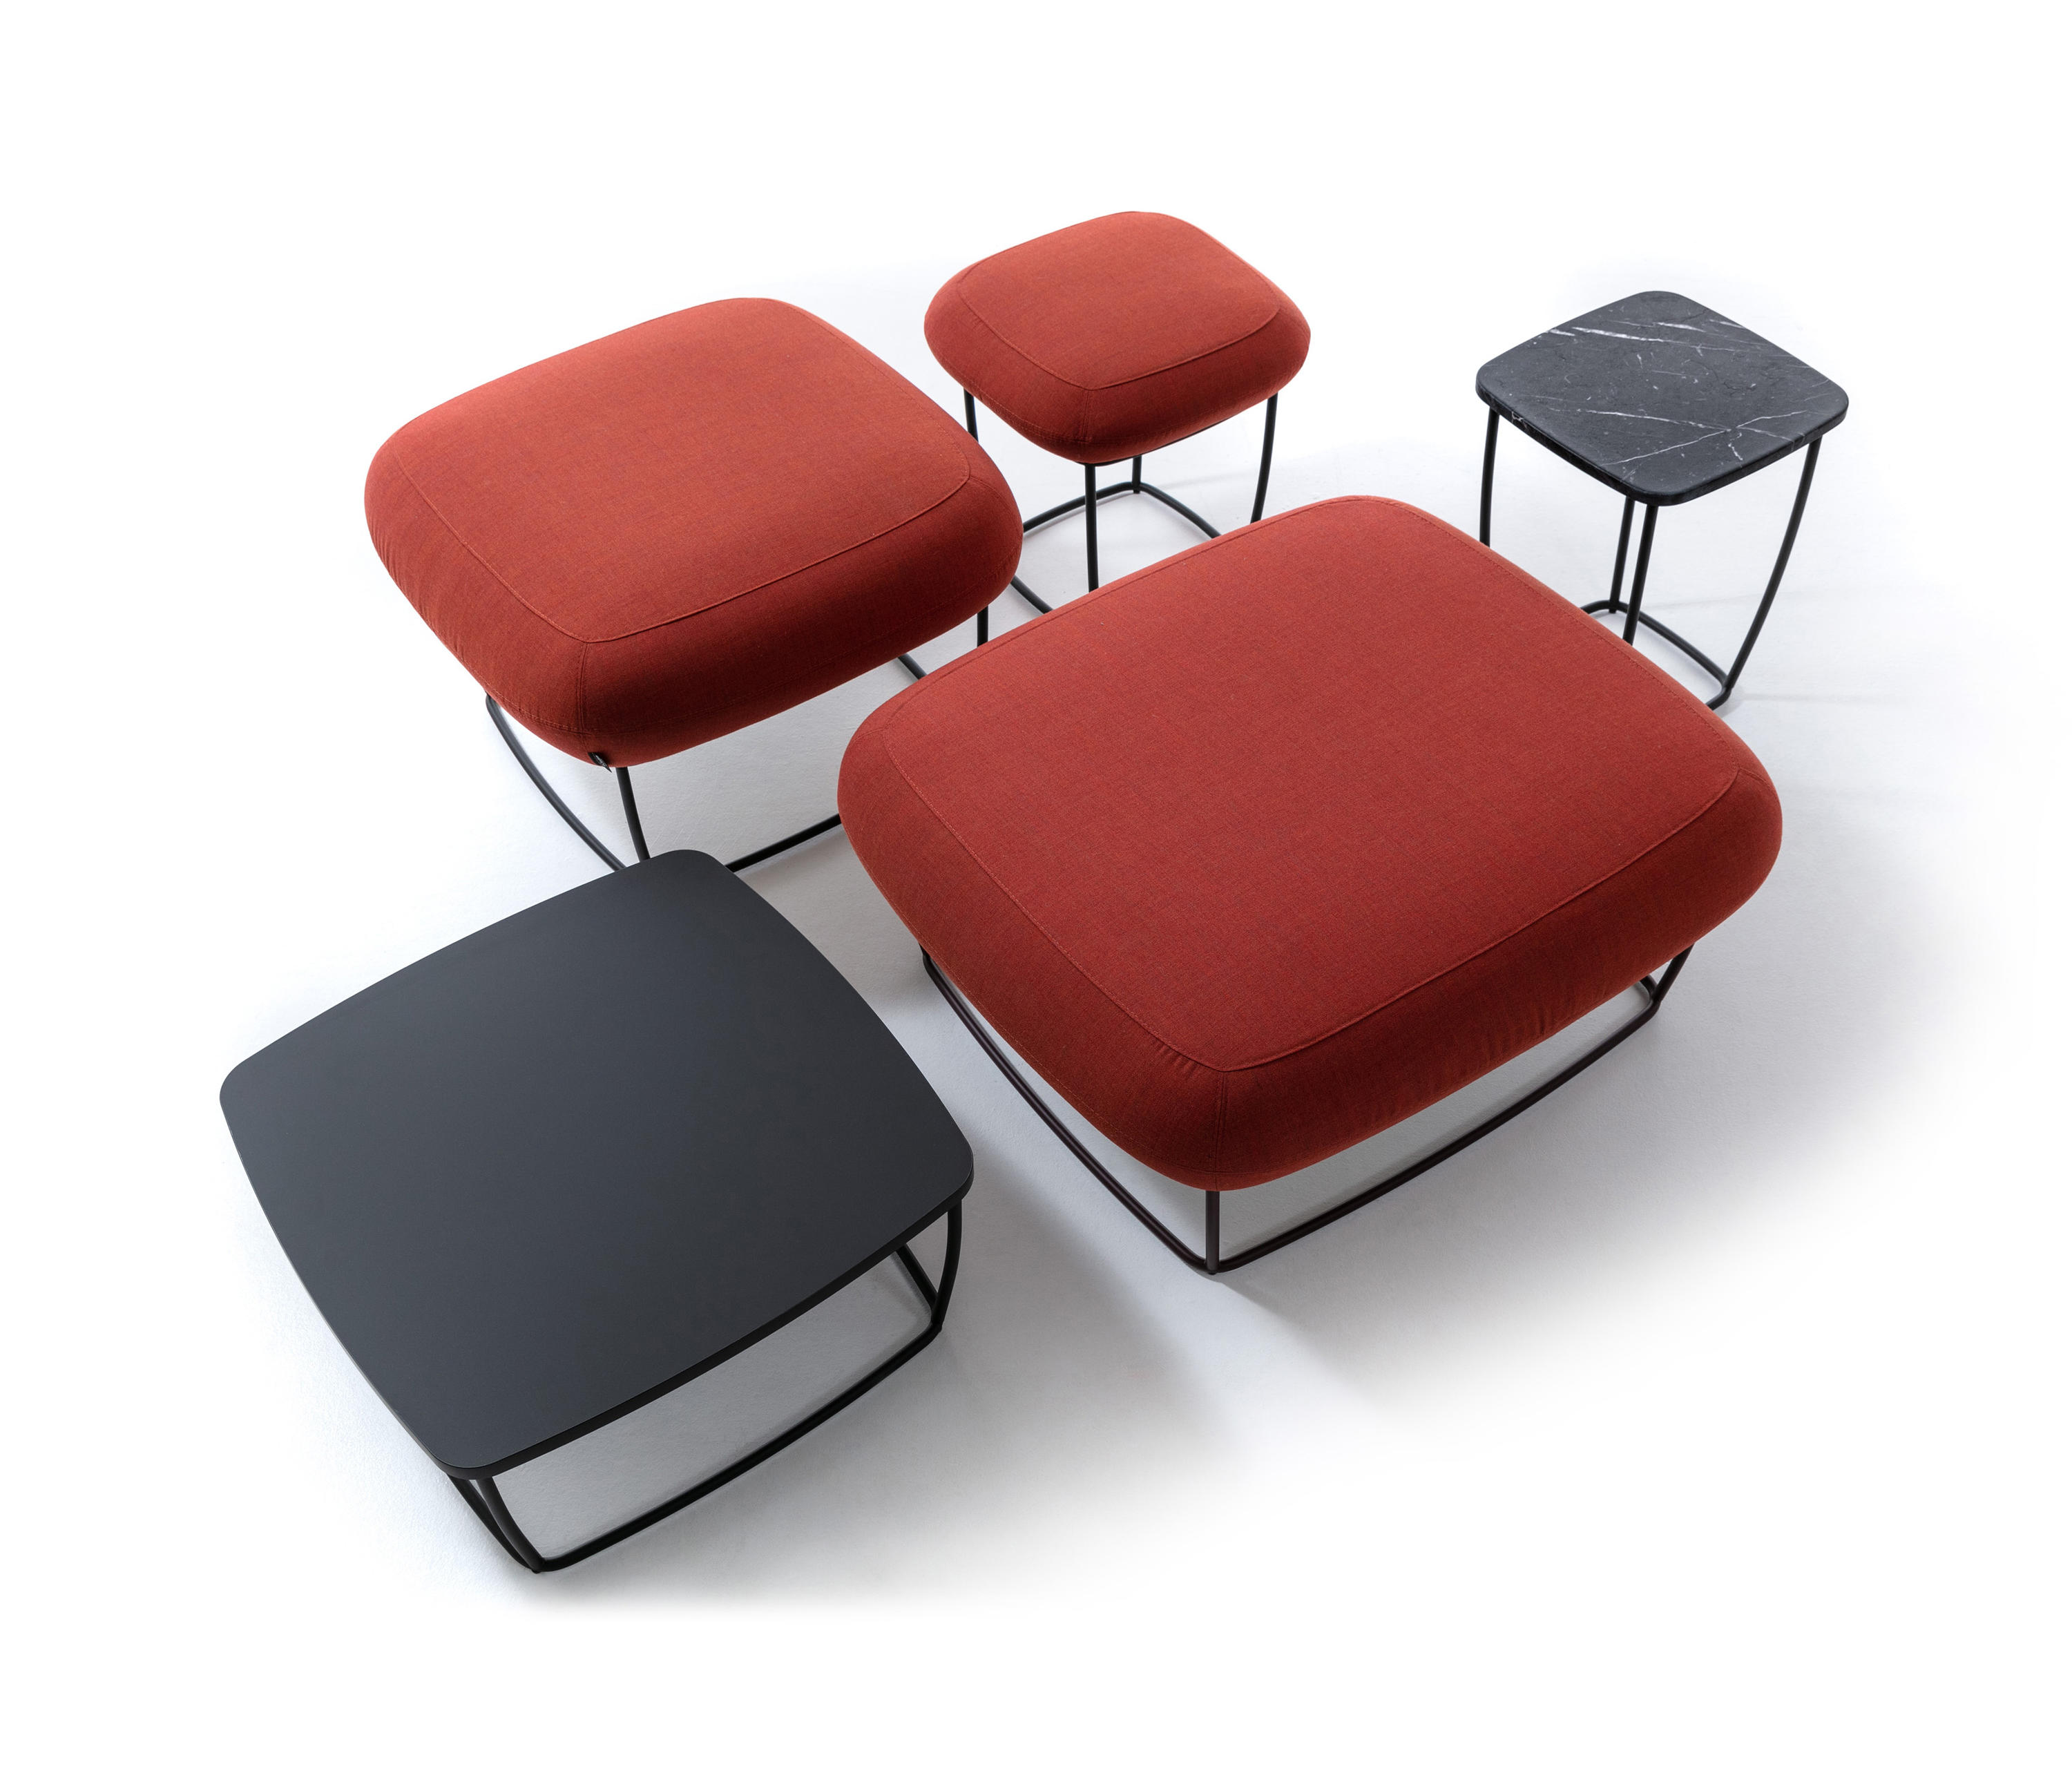 Bernard armchair & designer furniture | Architonic